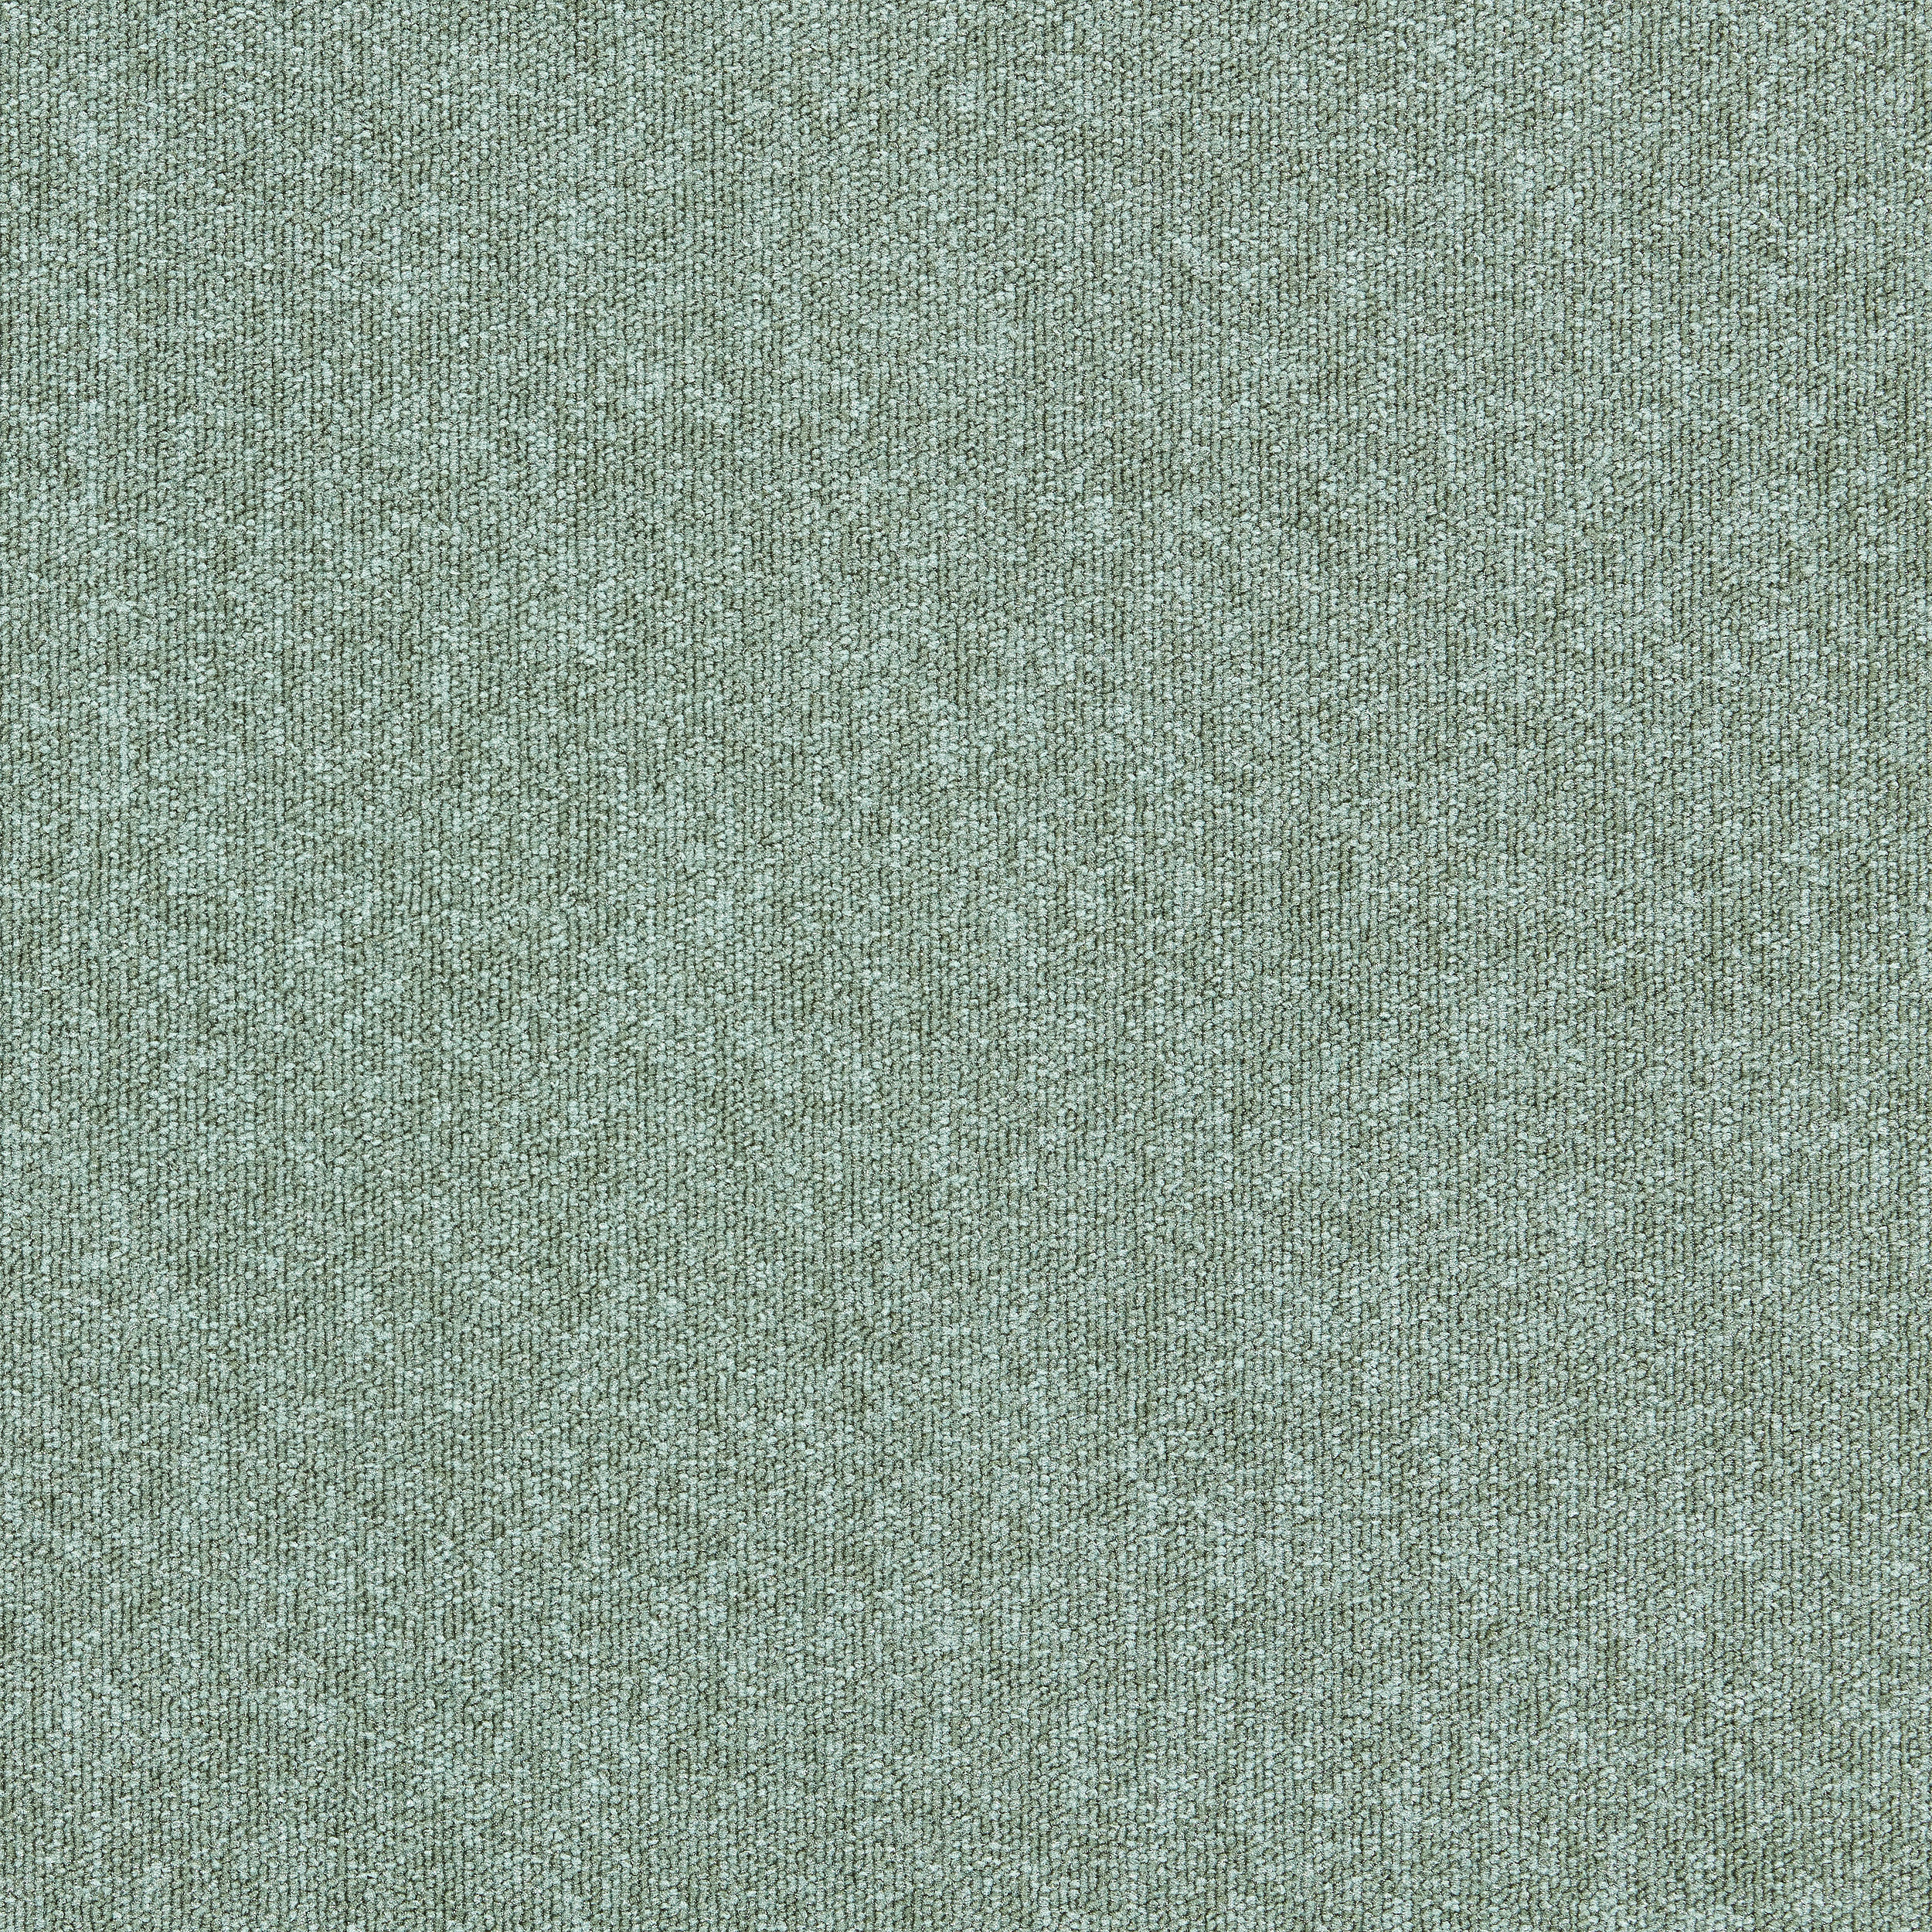 Heuga 580 II carpet tile in Laurel afbeeldingnummer 6